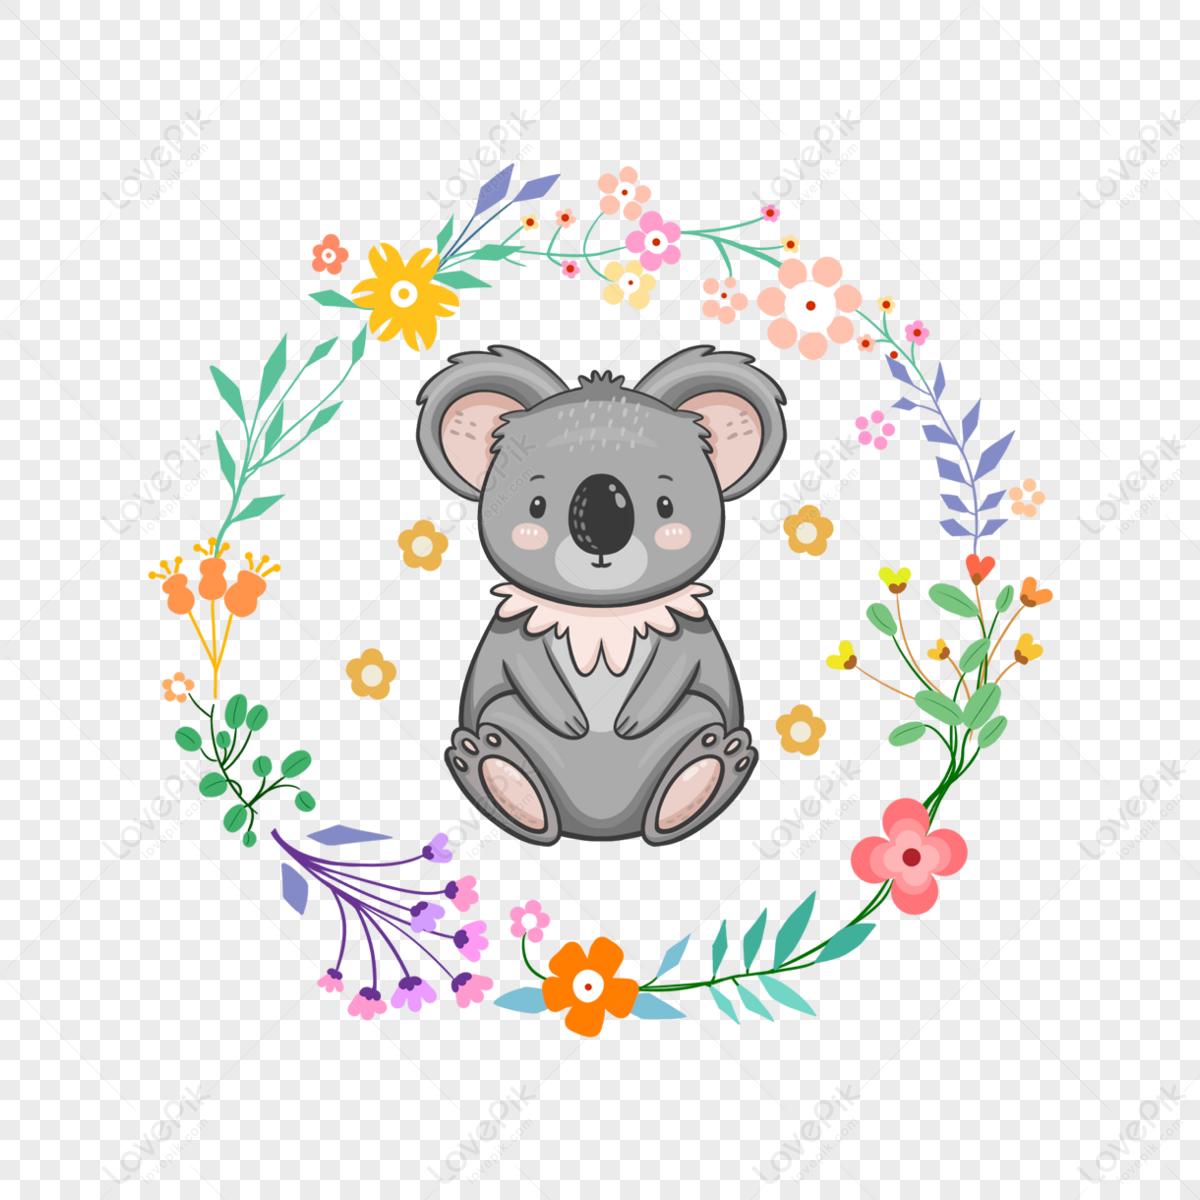 Kawaii koala cartoon design Royalty Free Vector Image